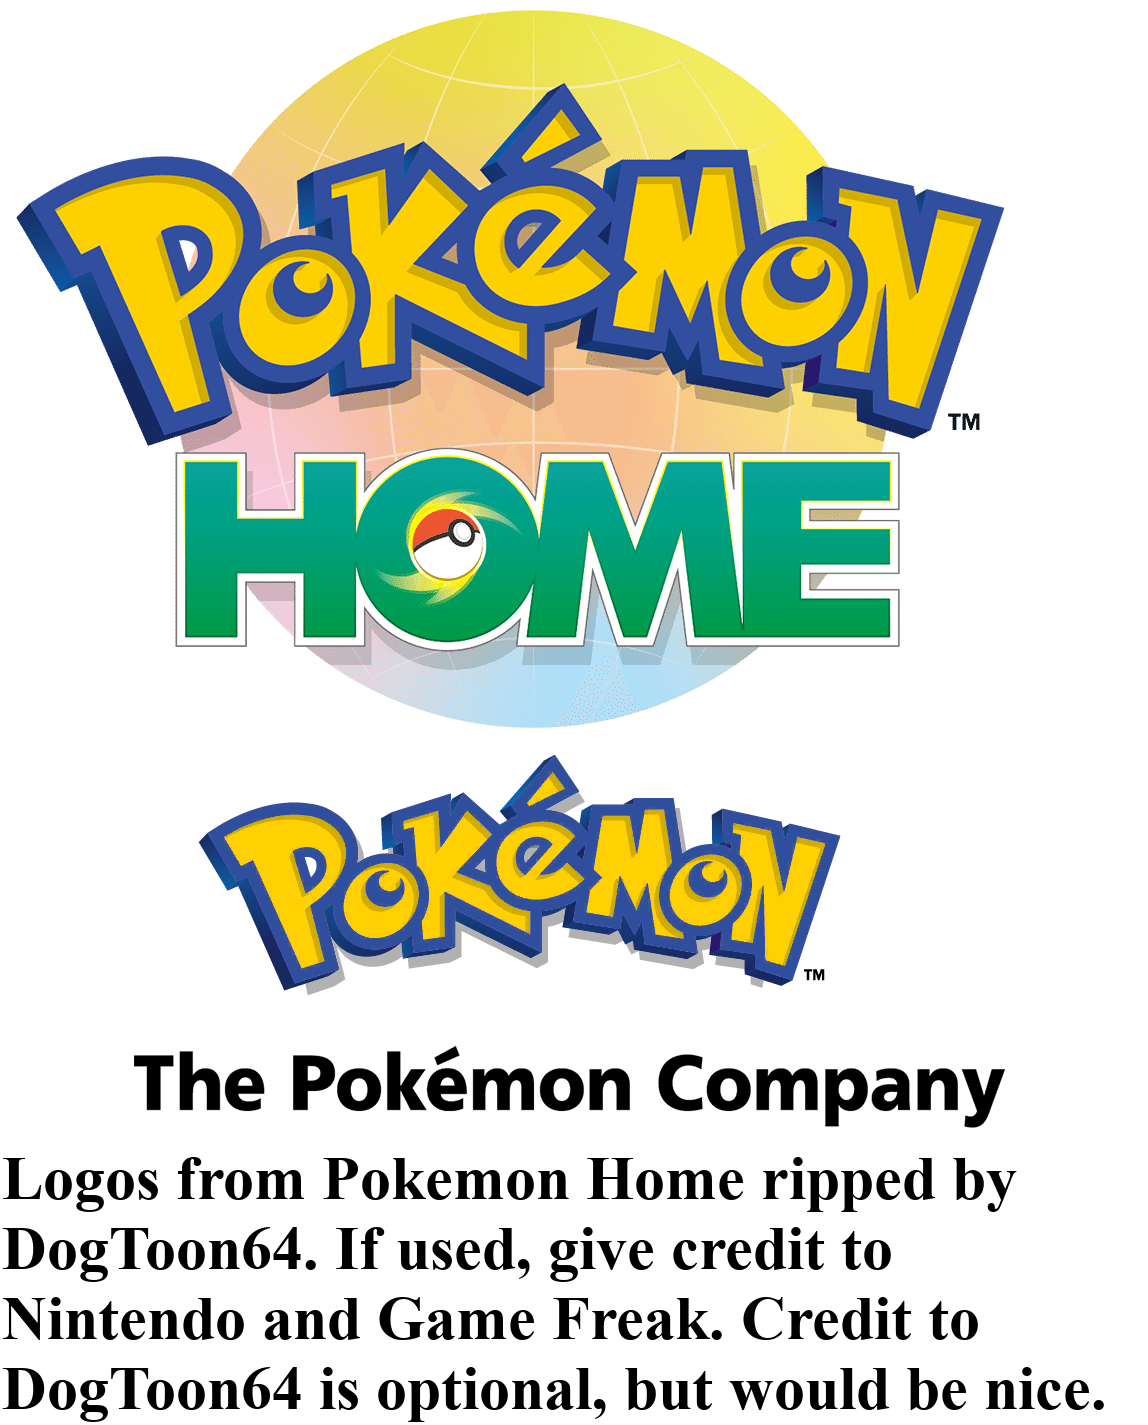 Pokémon HOME - Logos